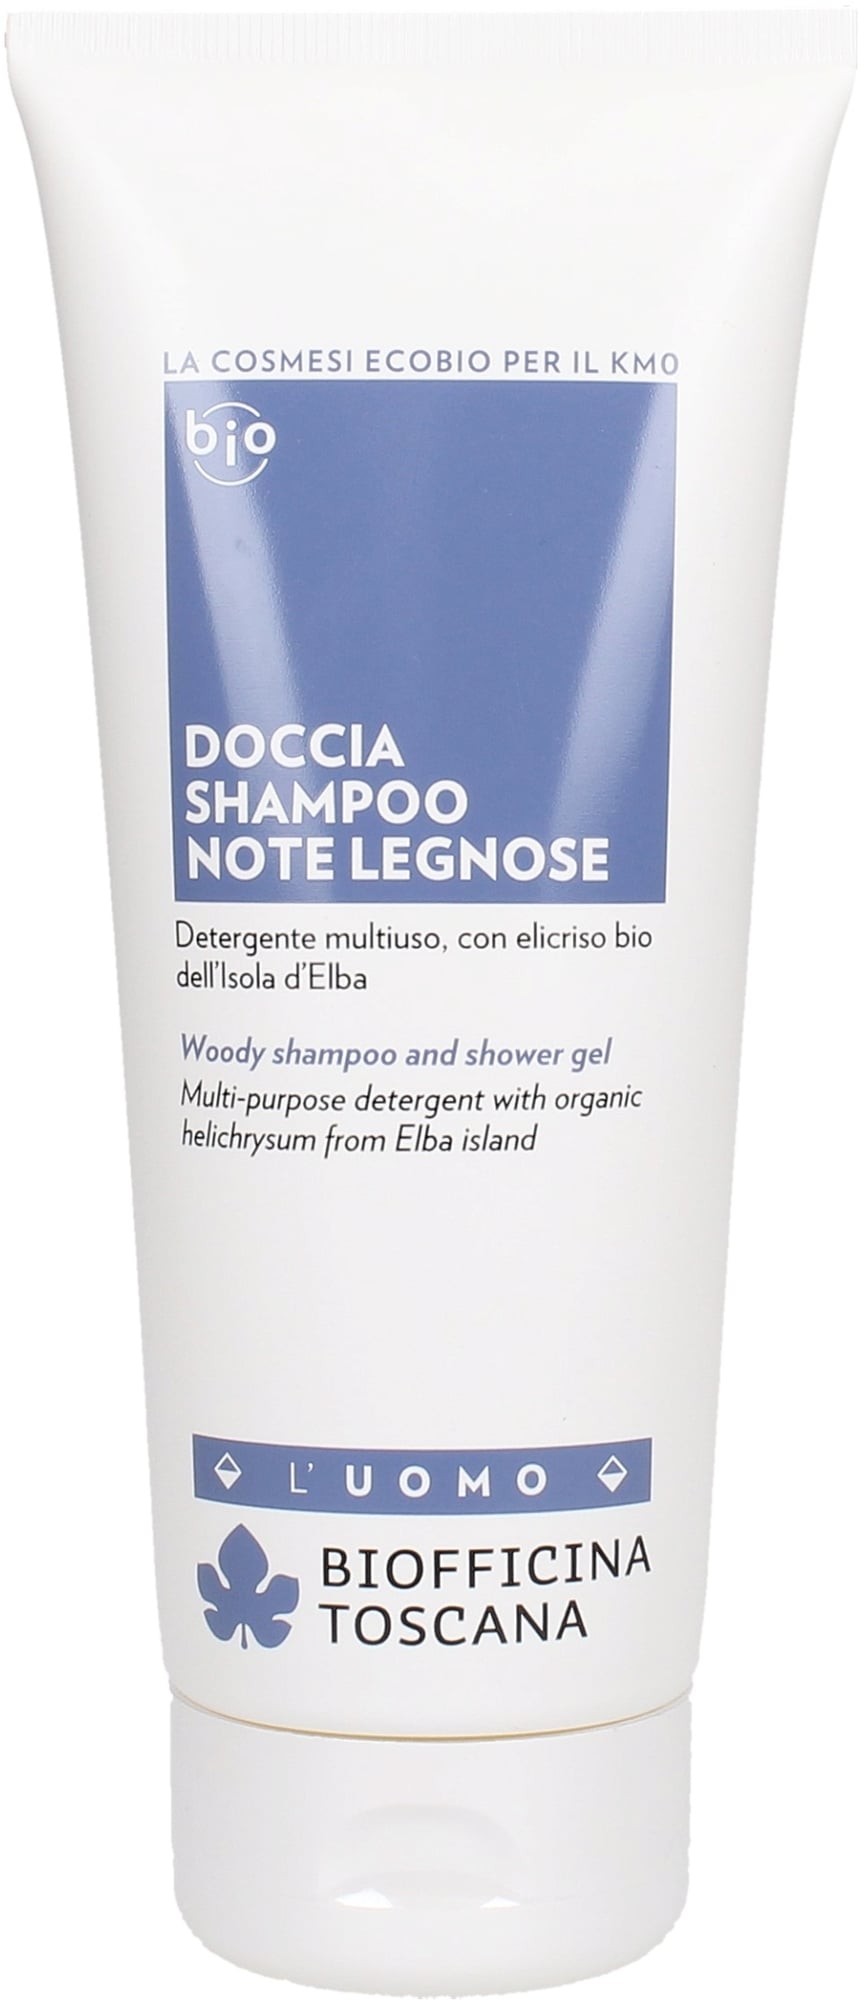 Biofficina Toscana uomo 2in1 Shampoo & Shower Gel - Woody scent